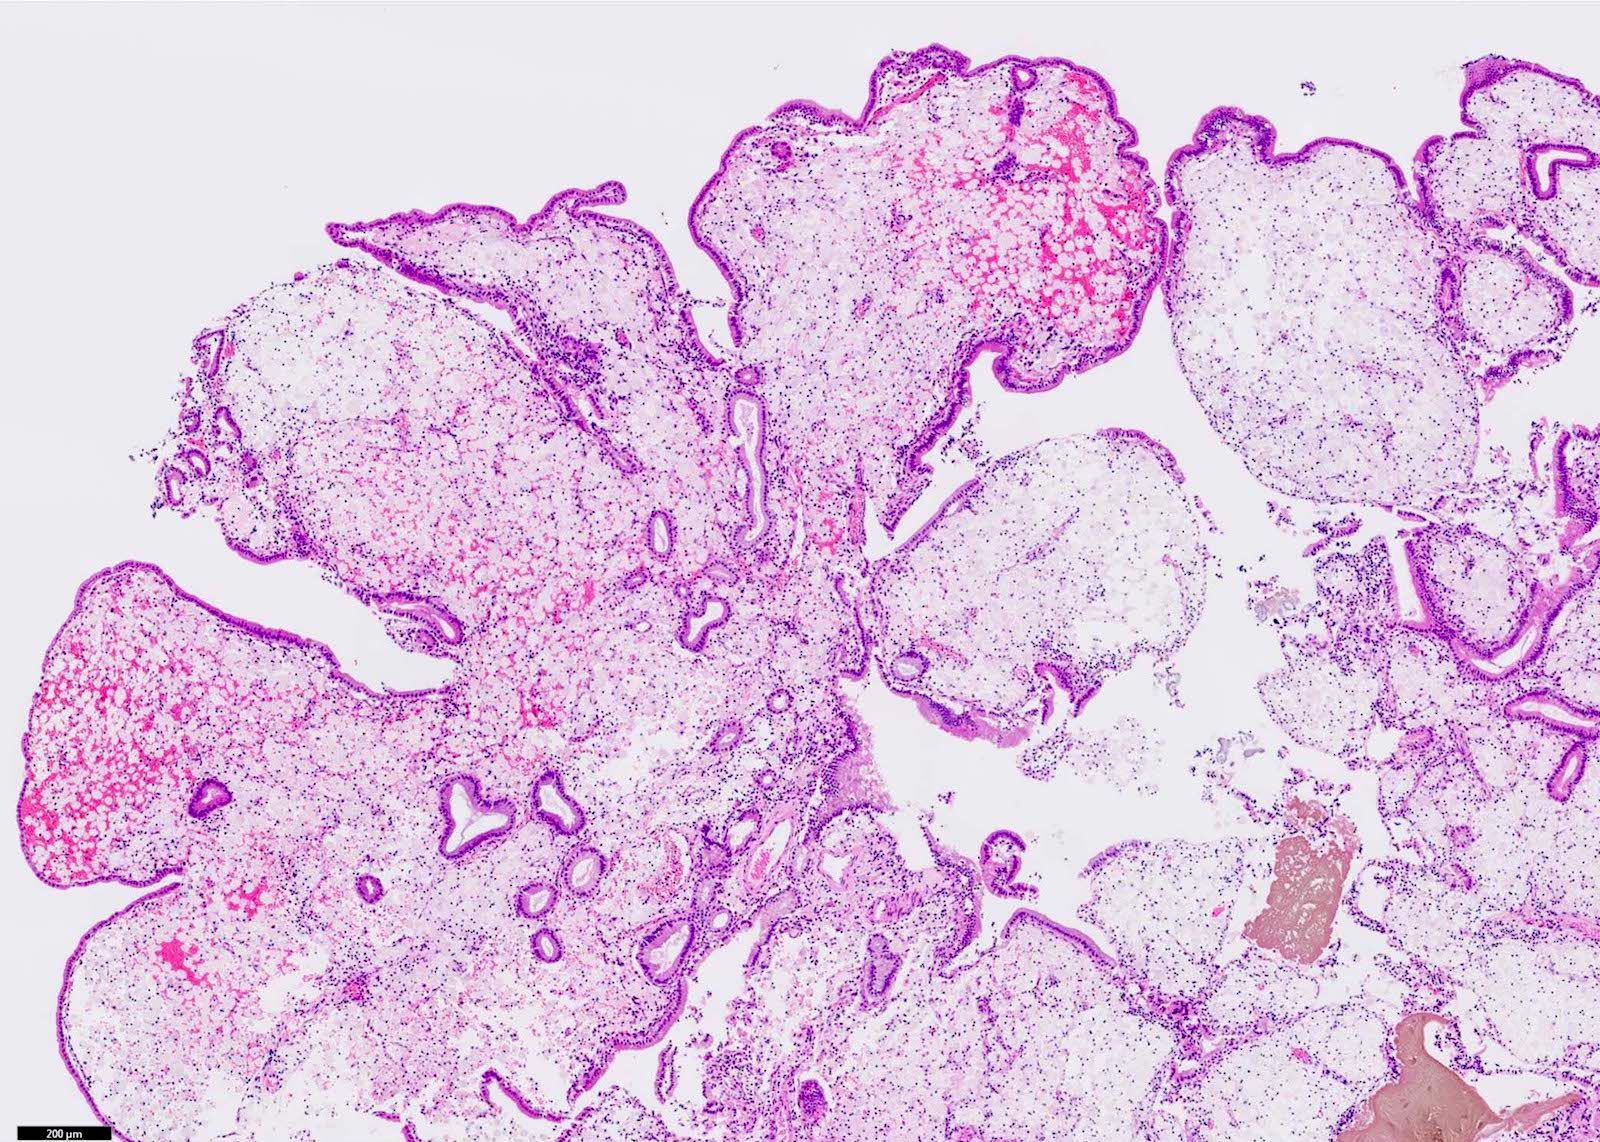 Stromal macrophages